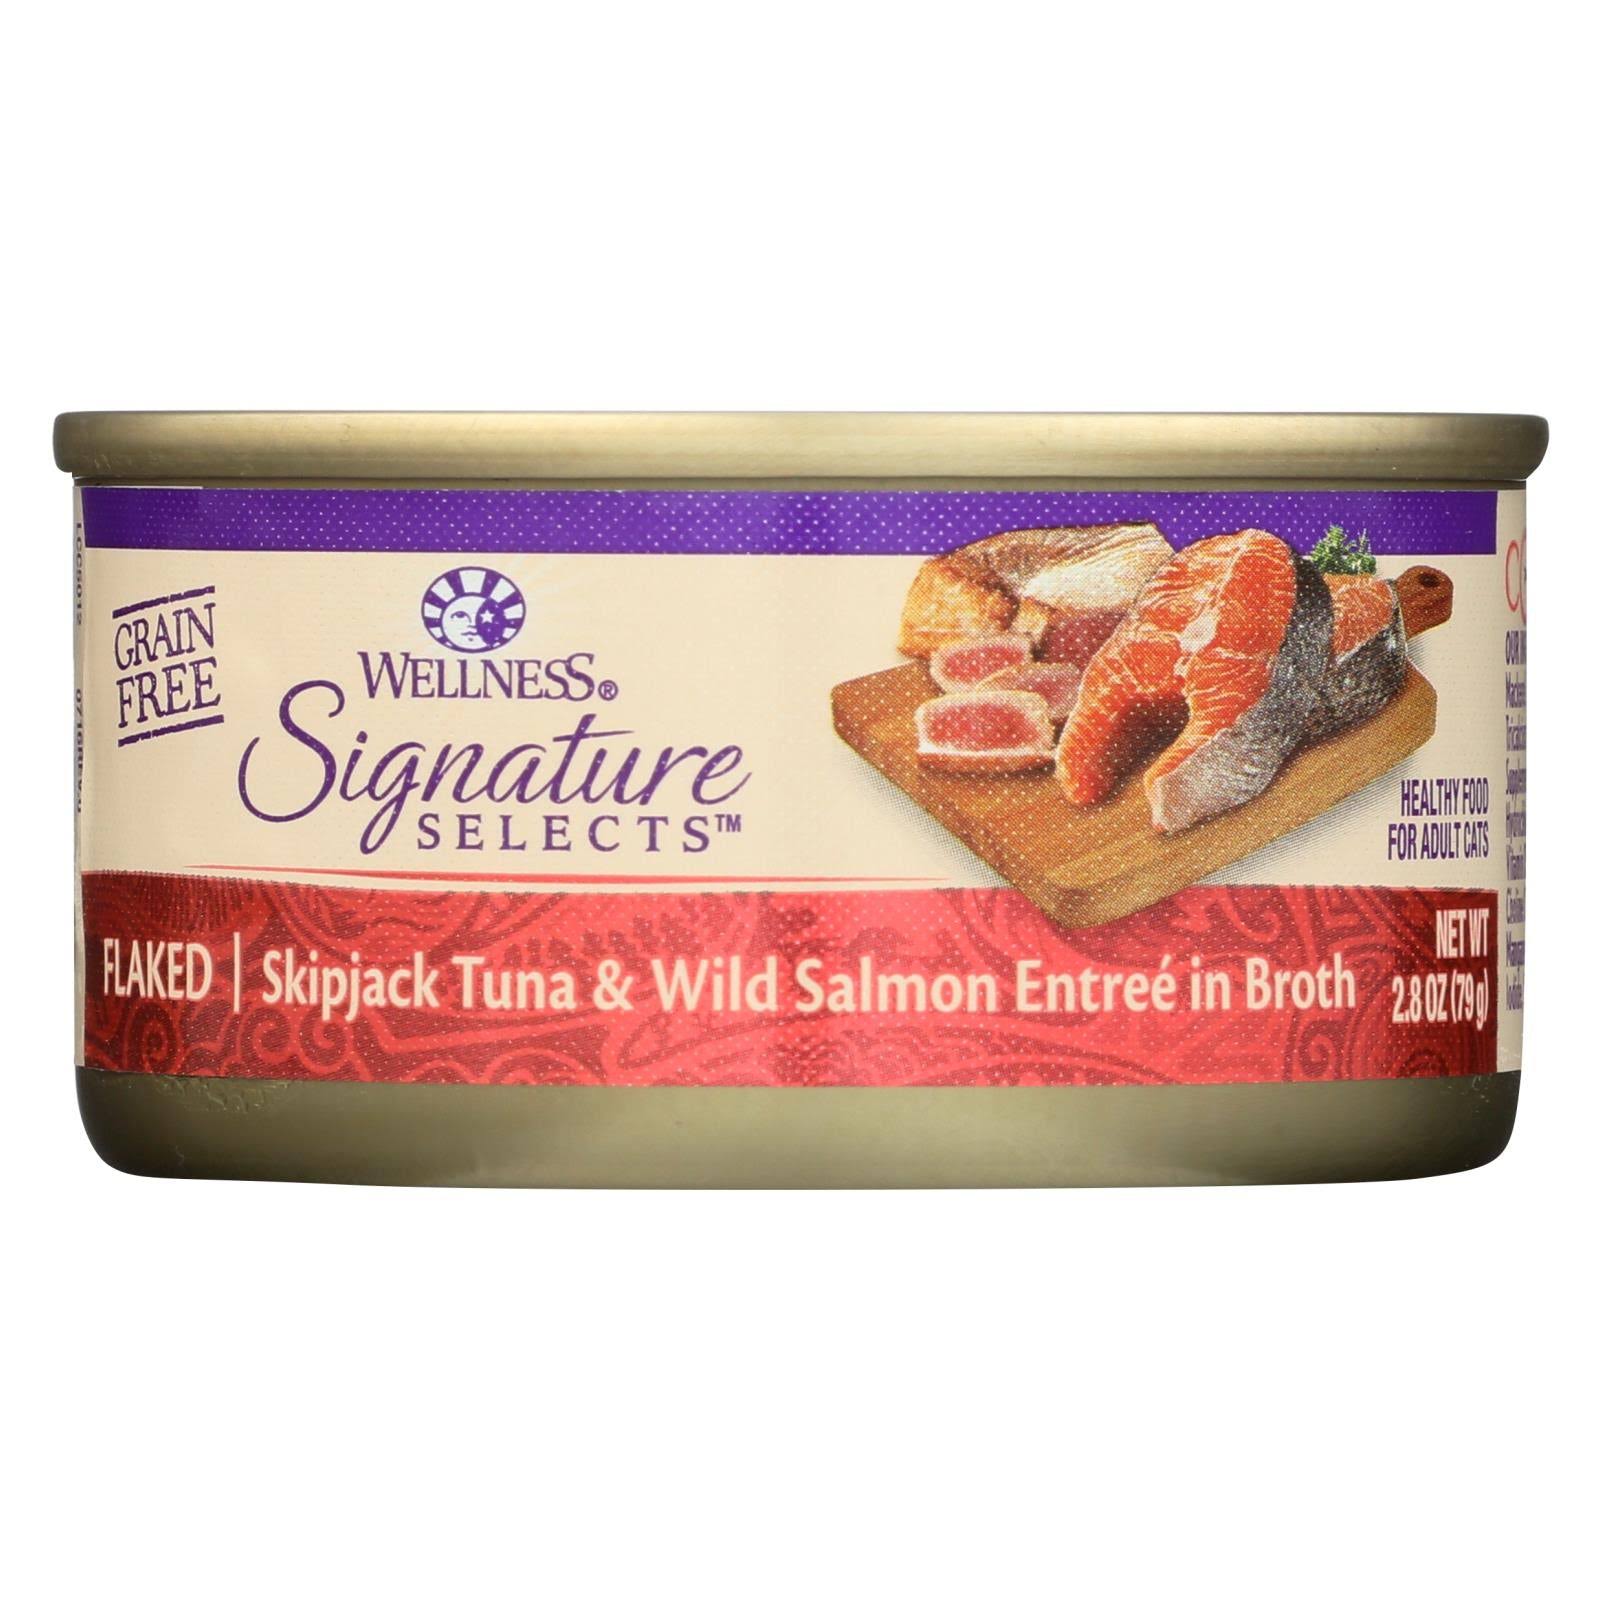 Wellness Signature Selects Natural Wet Cat Food - Flaked Skipjack Tuna & Wild Salmon, 2.8oz